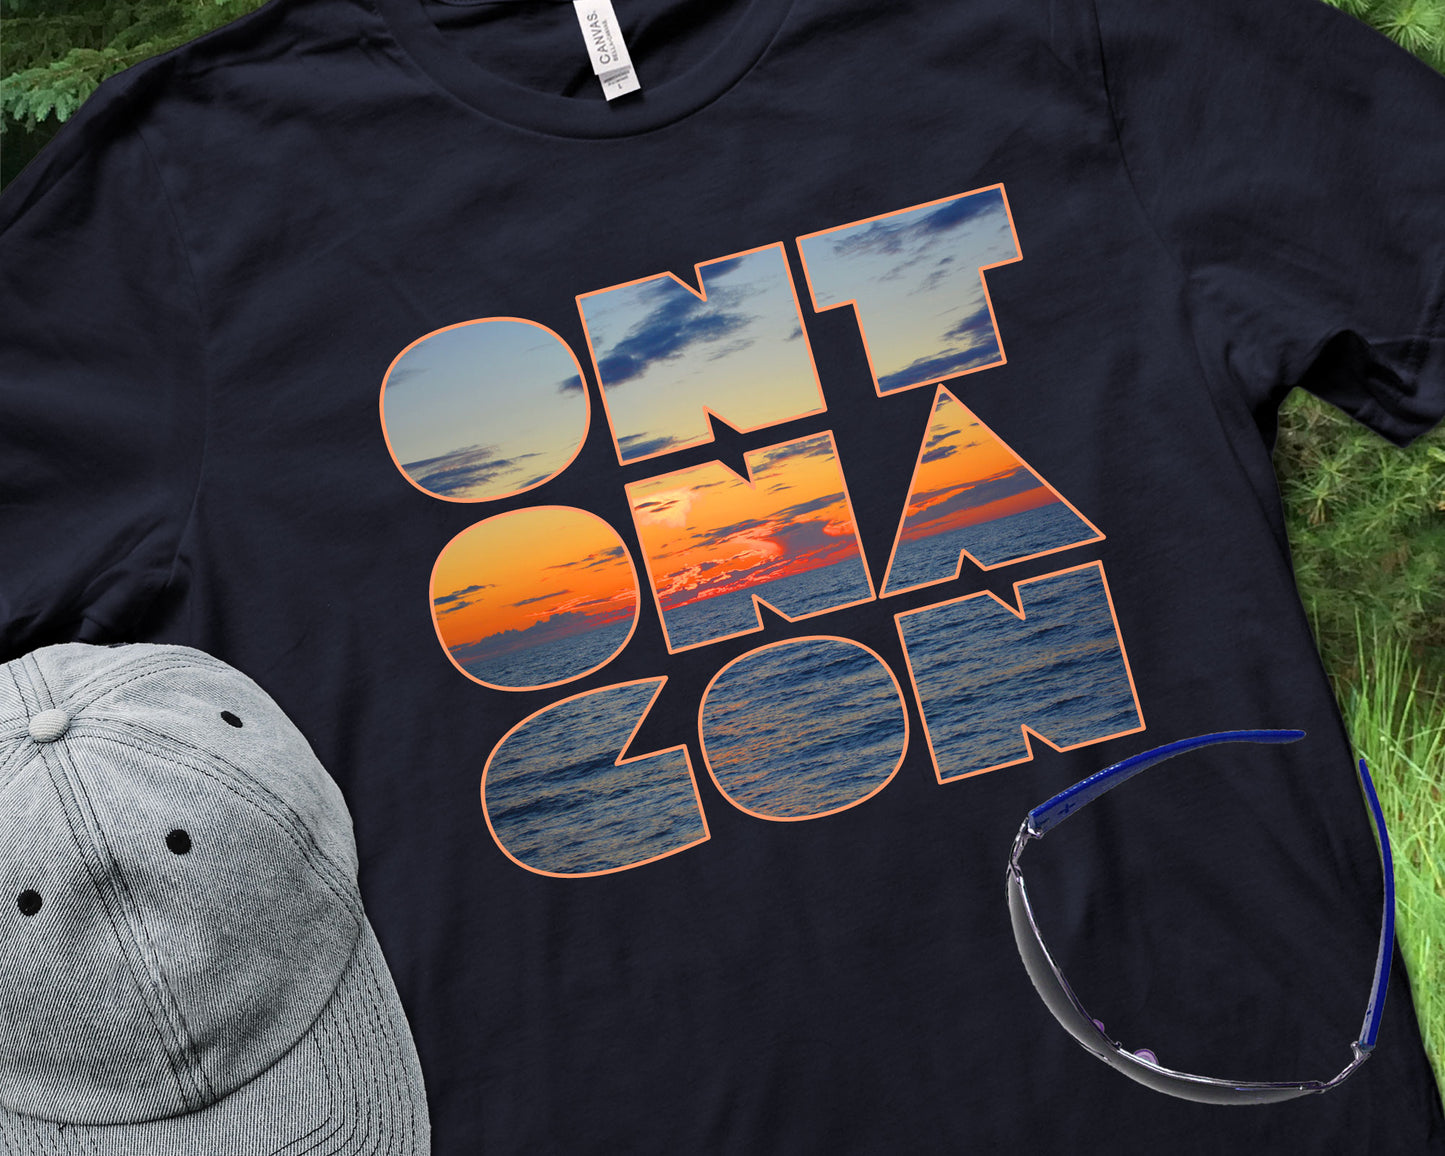 Ontonagon T-shirt | Ontonagon Lake Superior Sunset